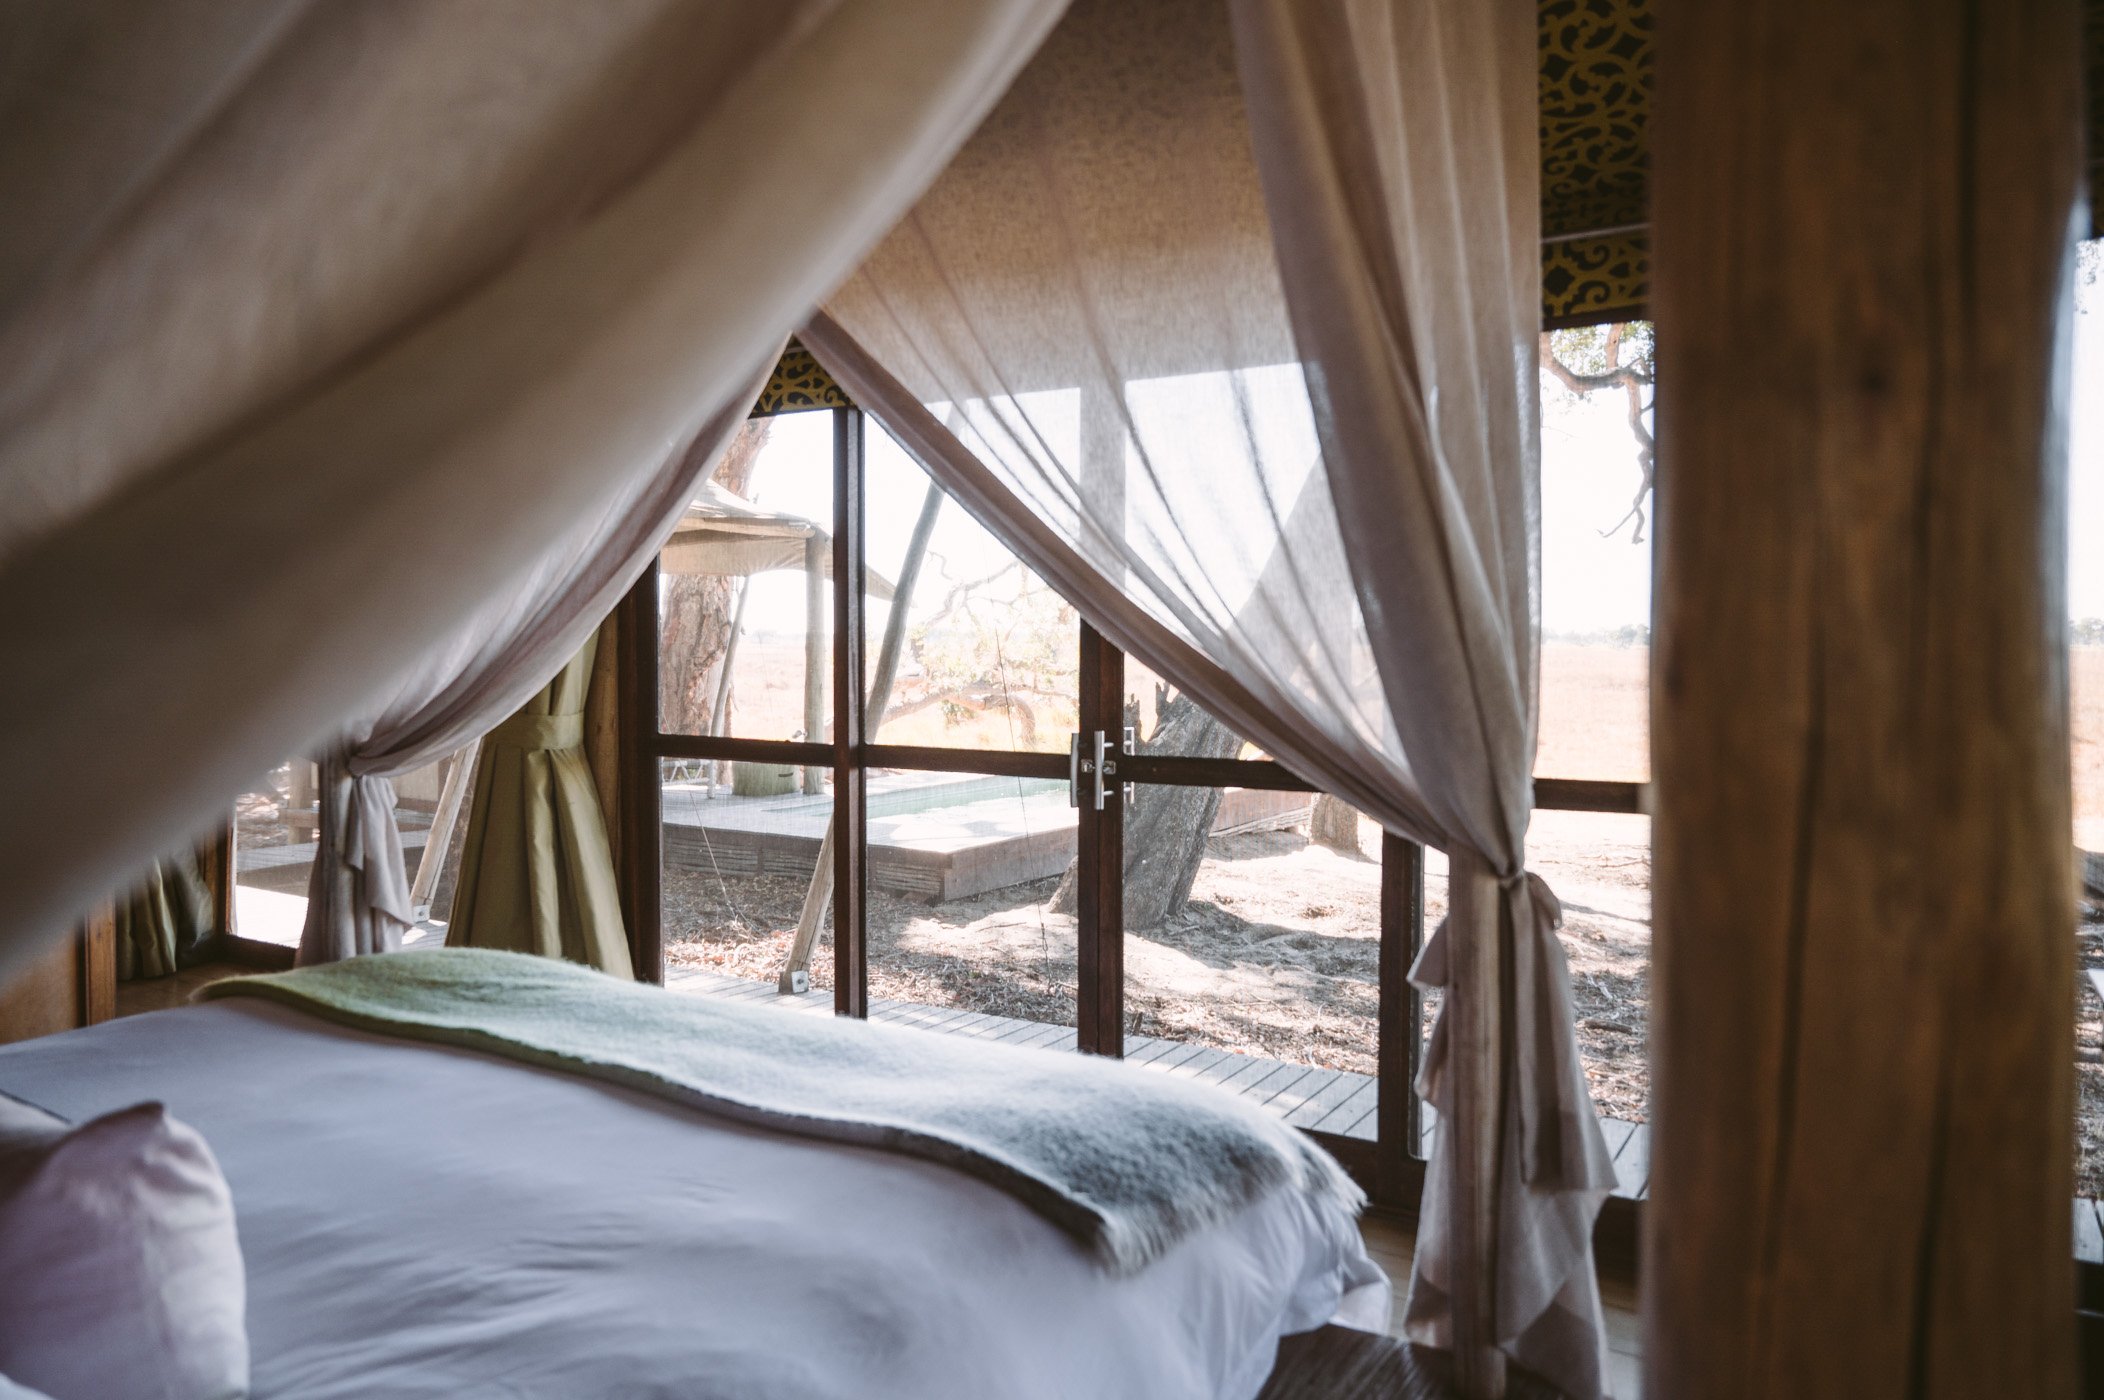 andBeyond Xaranna Okavango Delta Camp bedroom